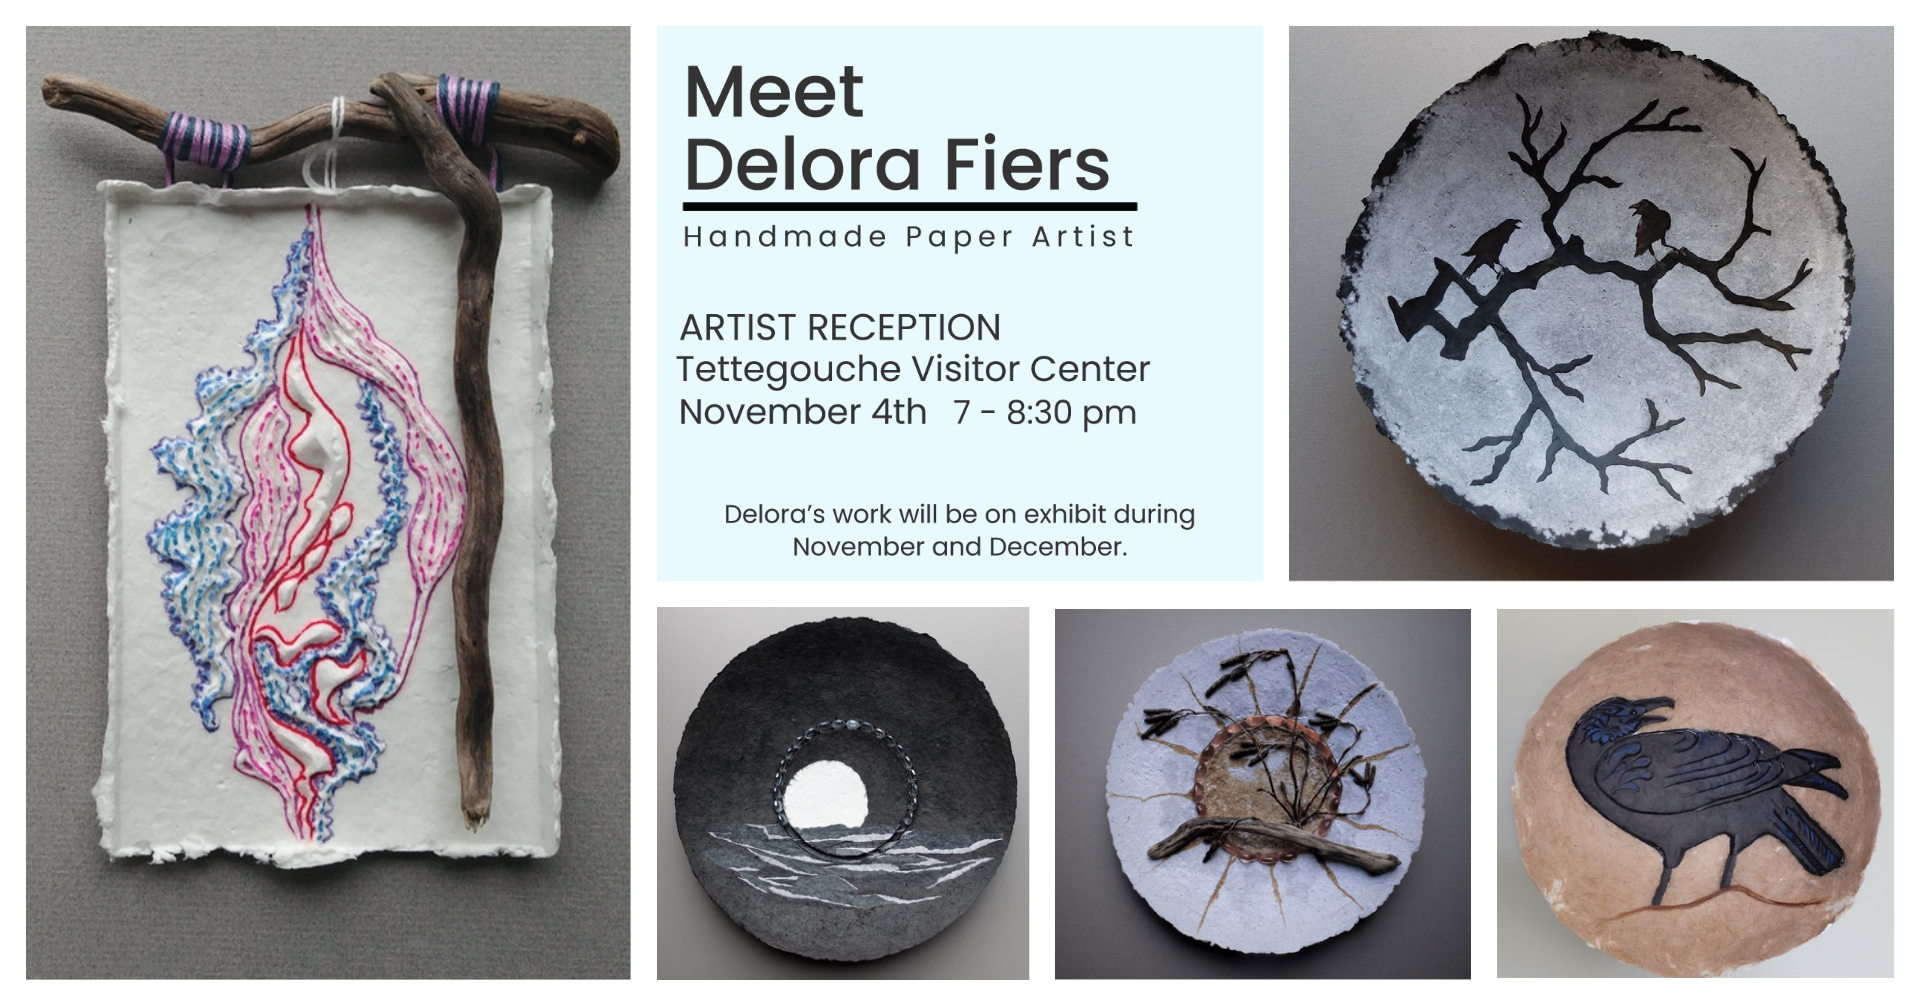 Artist Reception for Delora Fiers